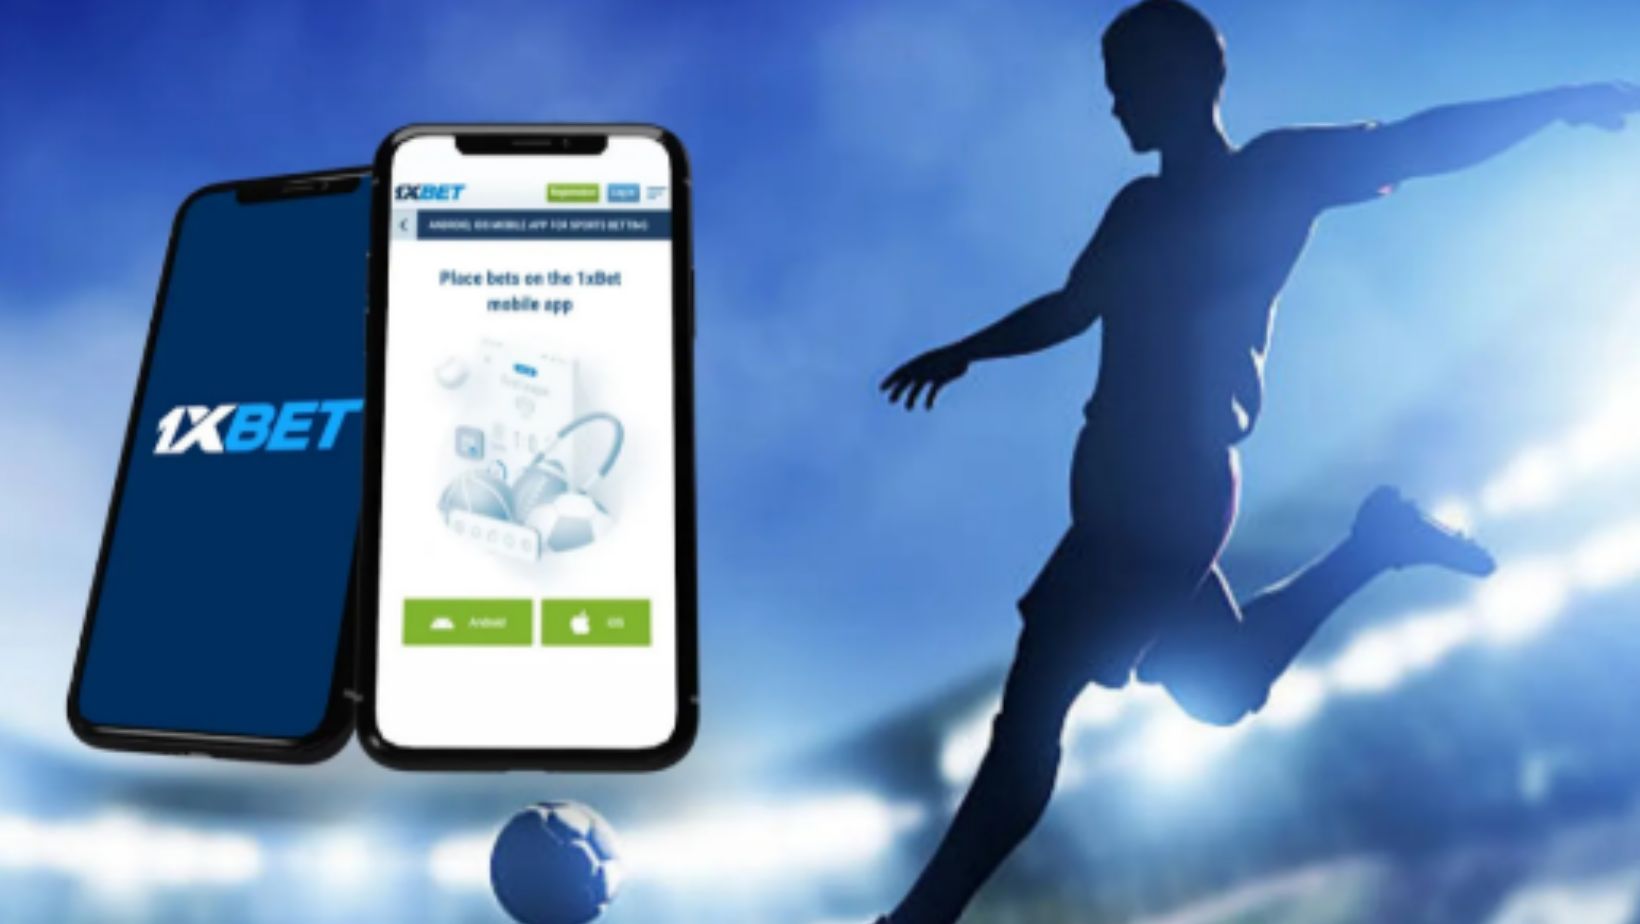 1xBet App – Profitable Mobile Betting